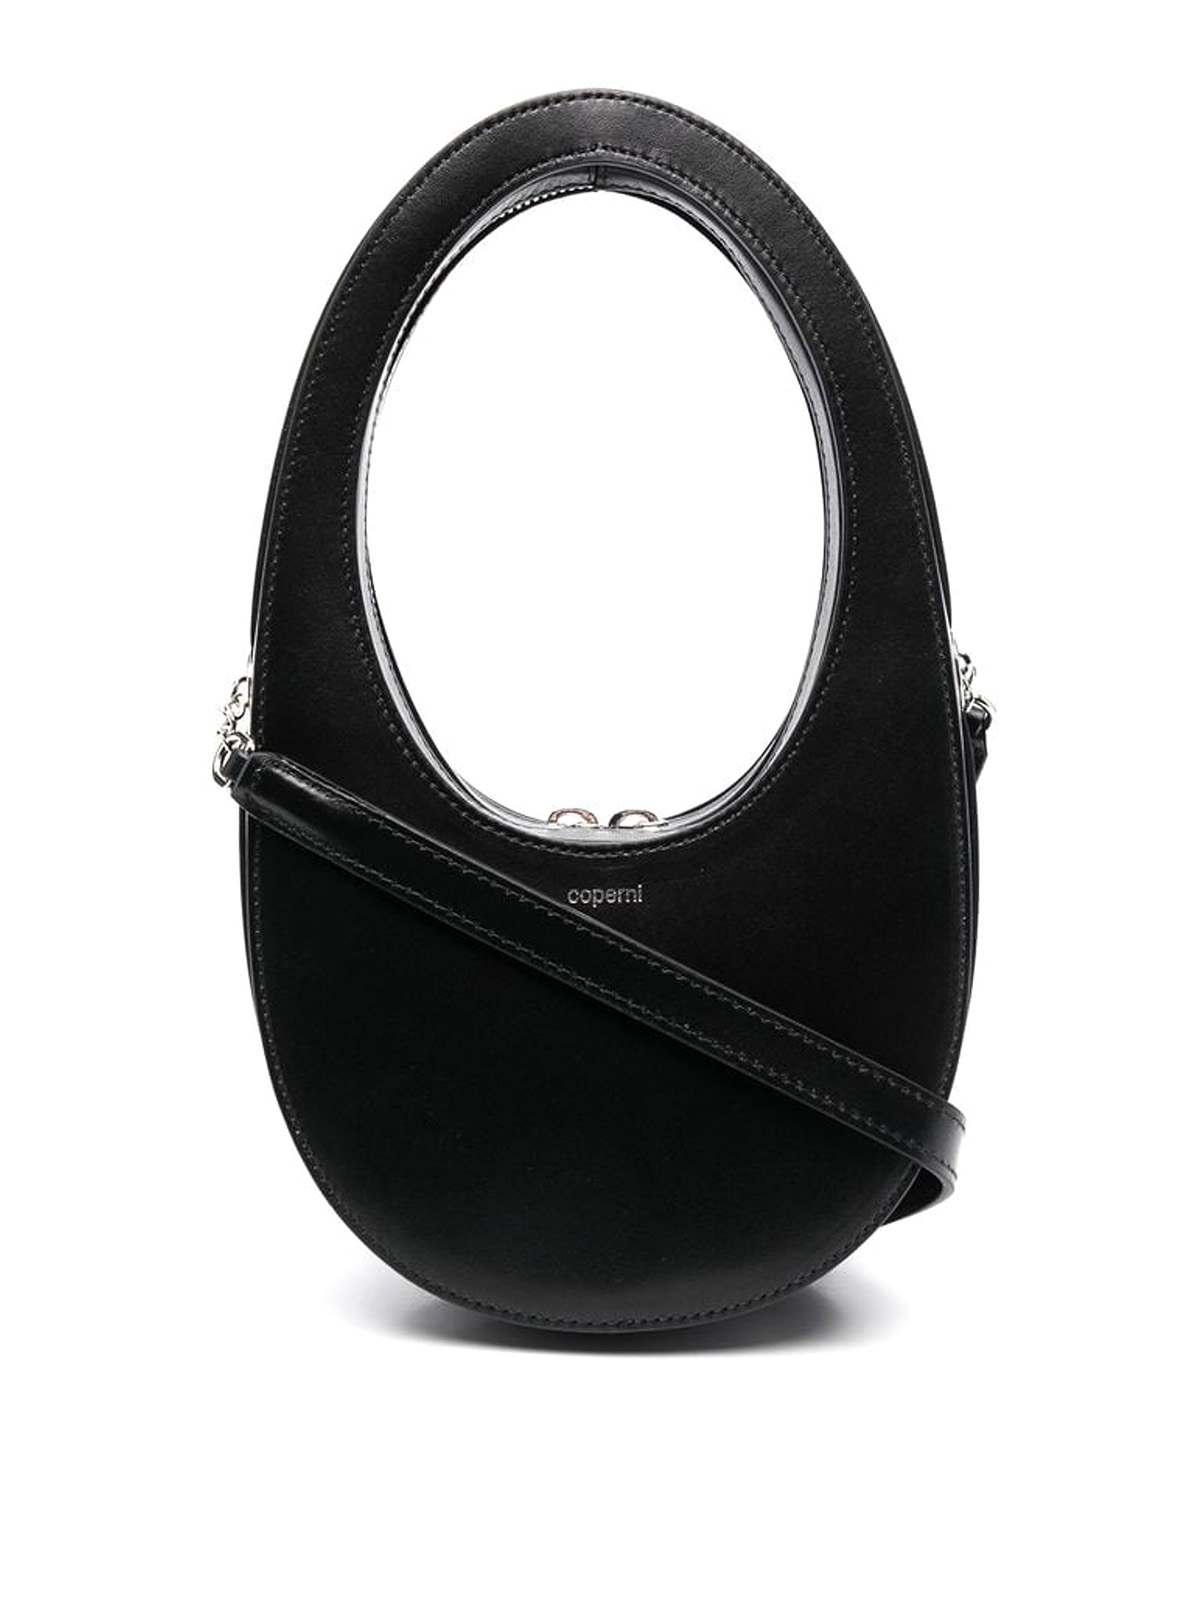 Coperni Black Calf Leather Swipe Mini Bag